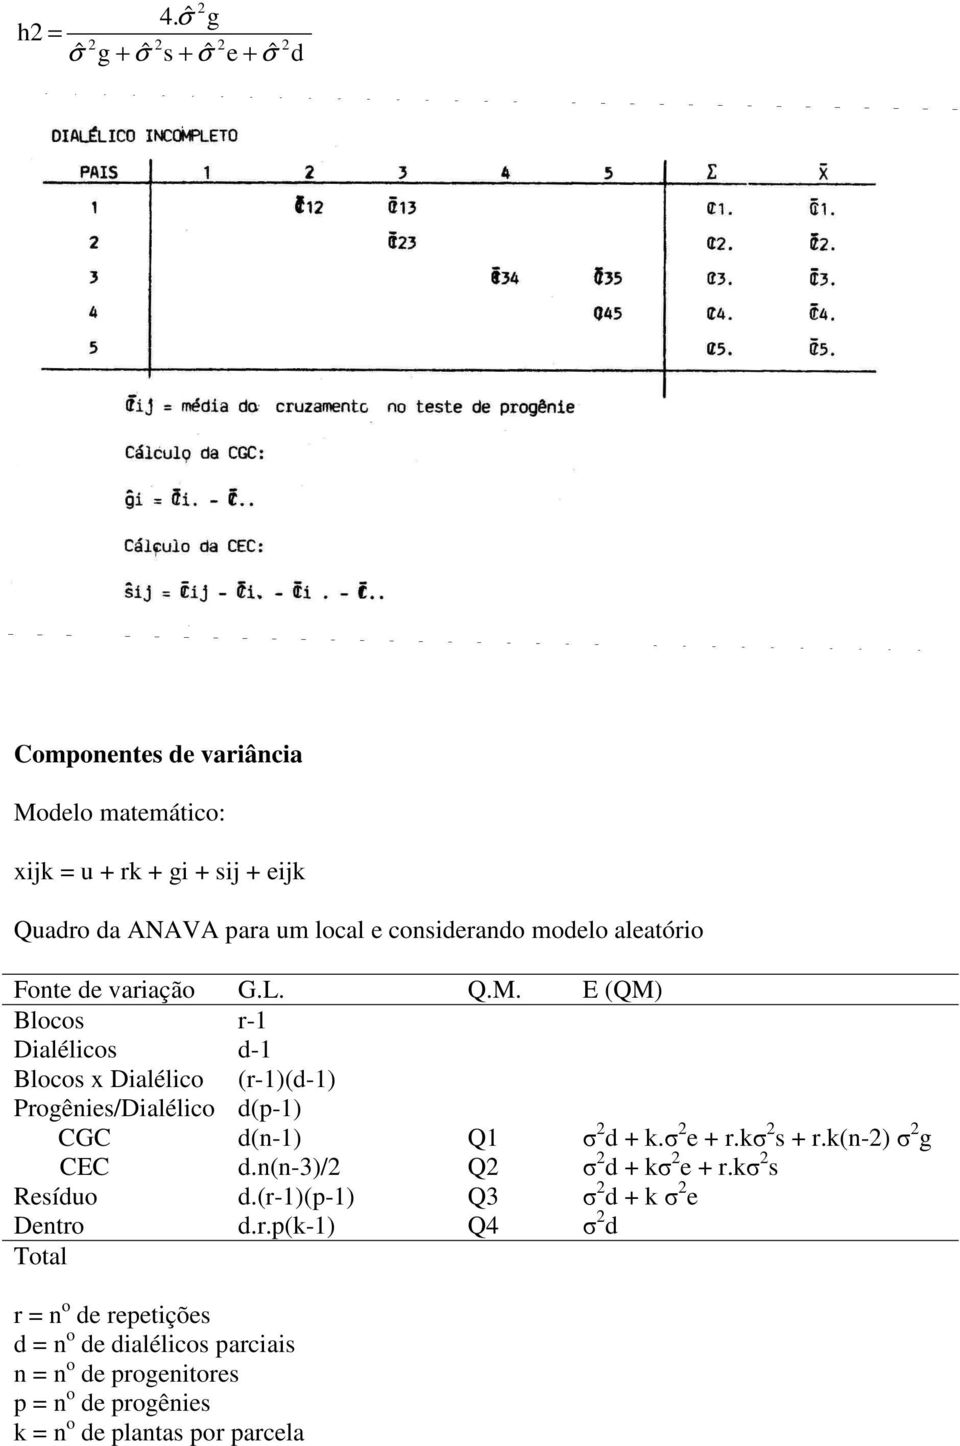 E (QM) Blocos Dialélicos Blocos x Dialélico Progênies/Dialélico CGC CEC Resíduo Dentro r-1 d-1 (r-1)(d-1) d(p-1) d(n-1) d.n(n-3)/ d.